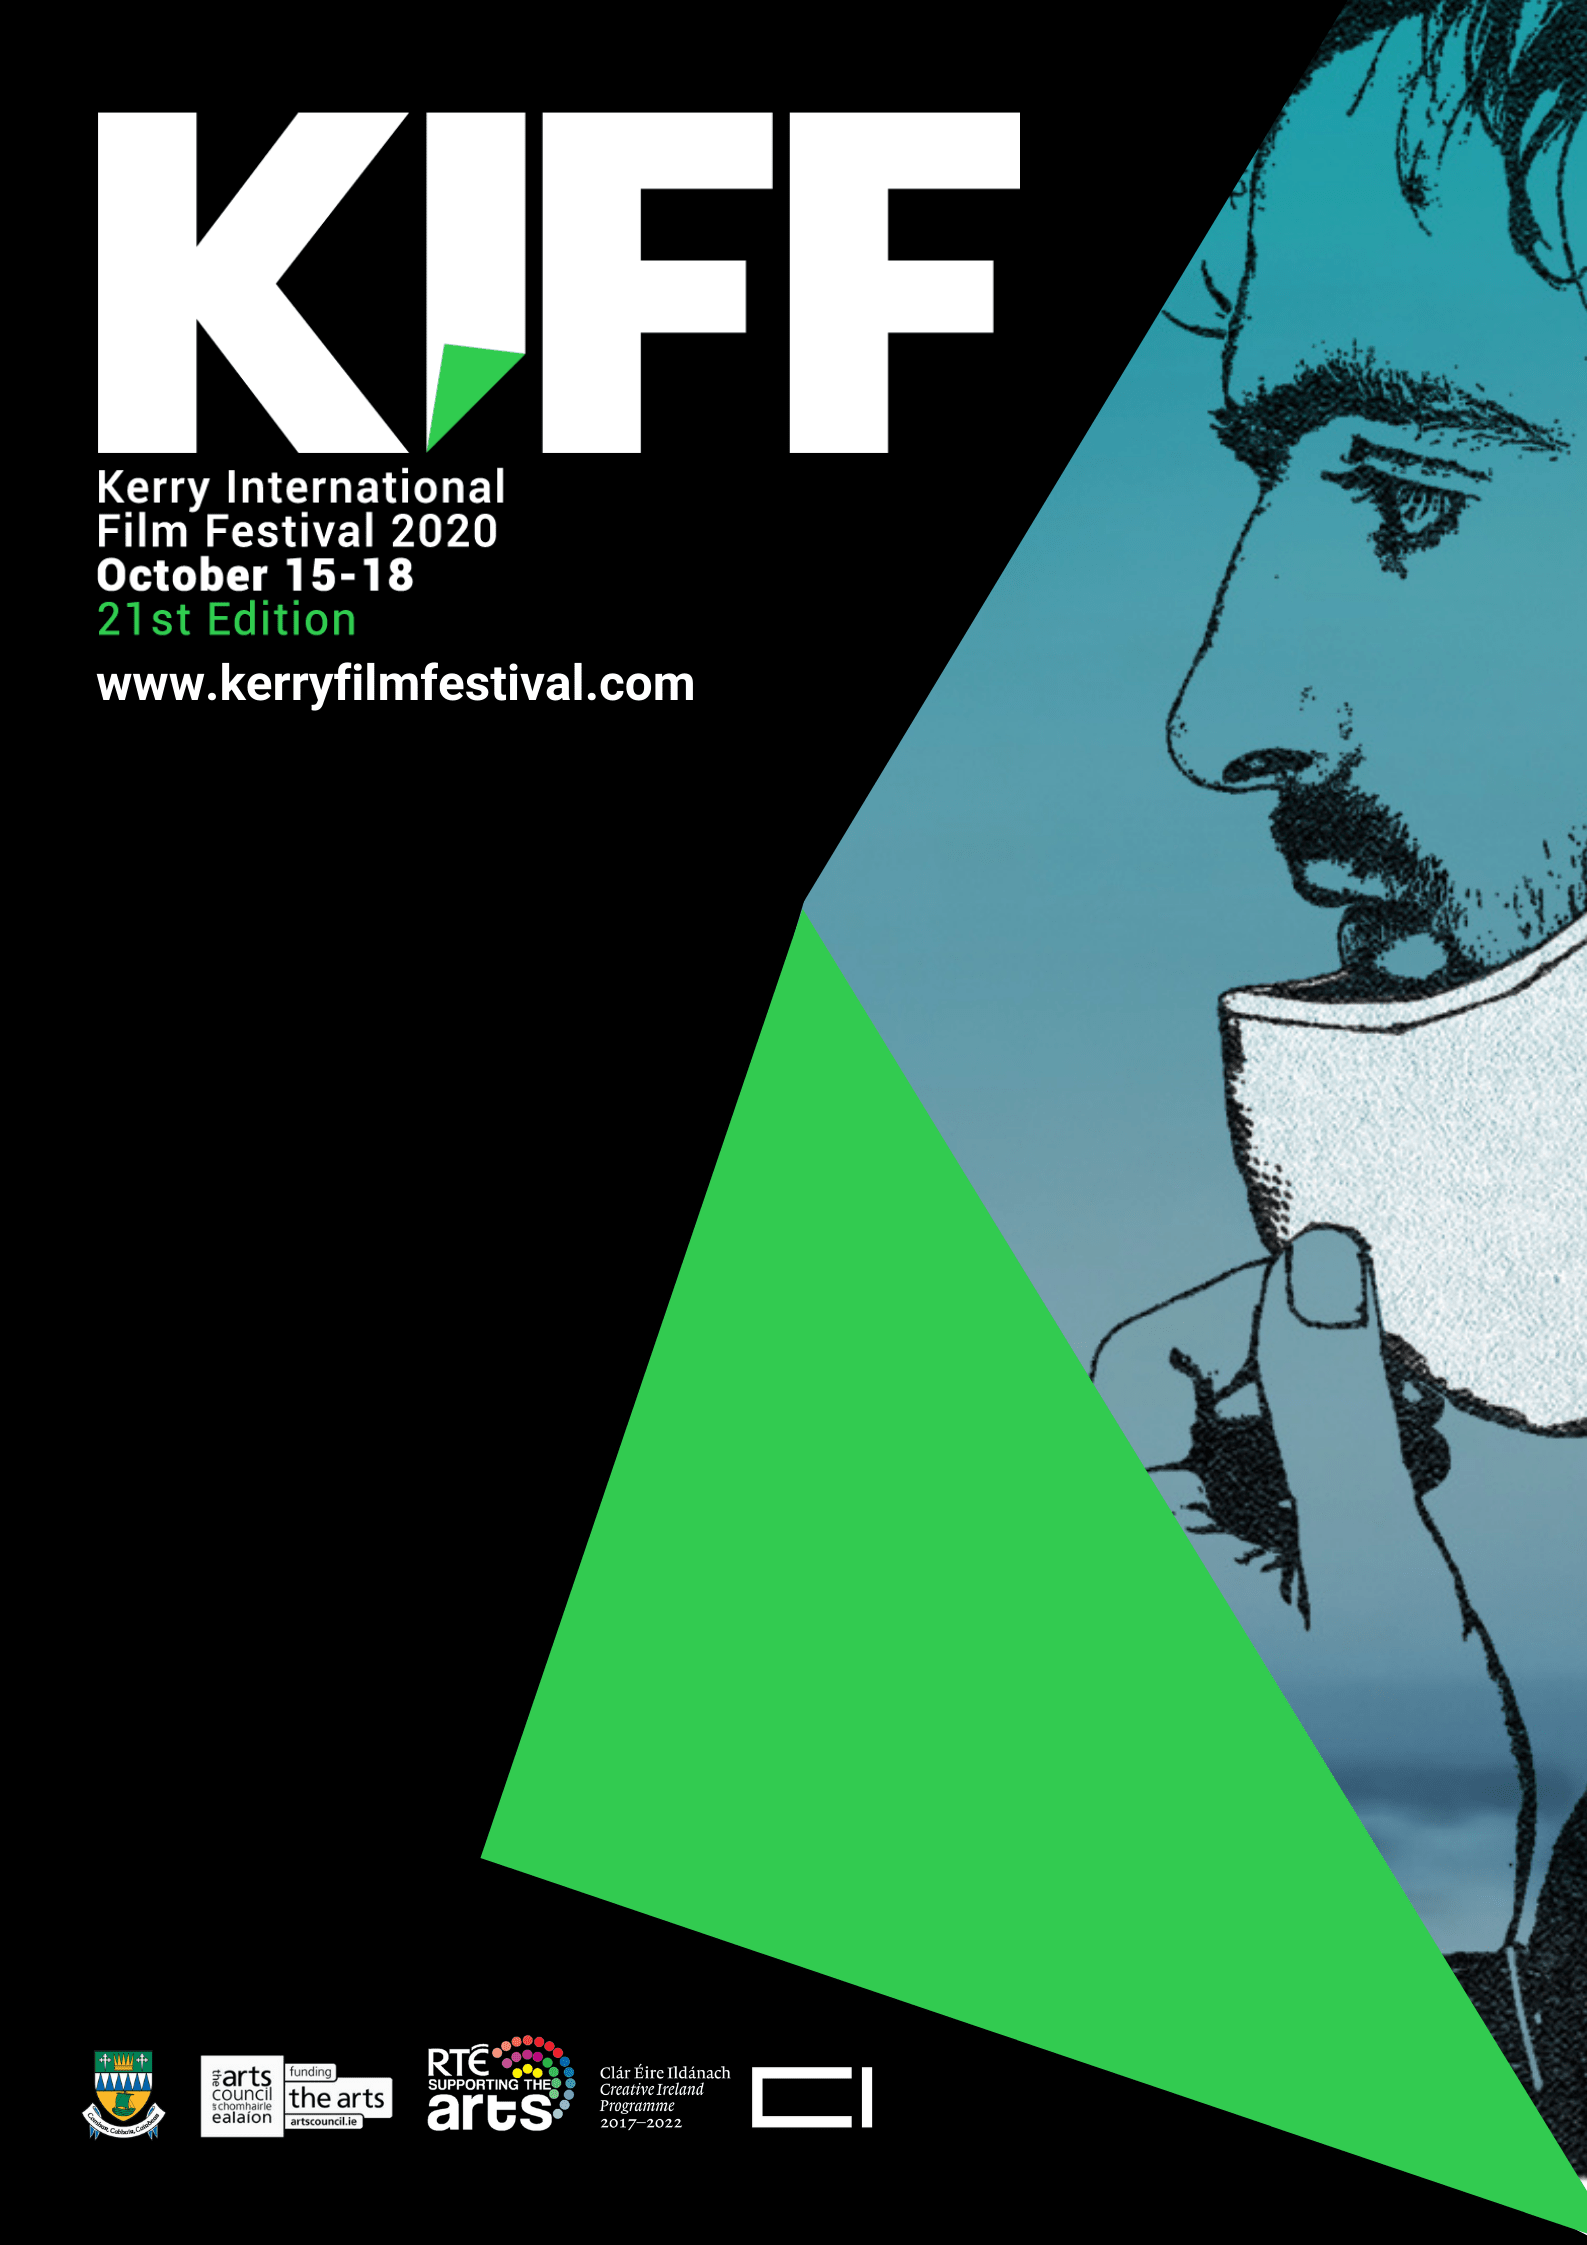 Kerry International Film Festival 2020